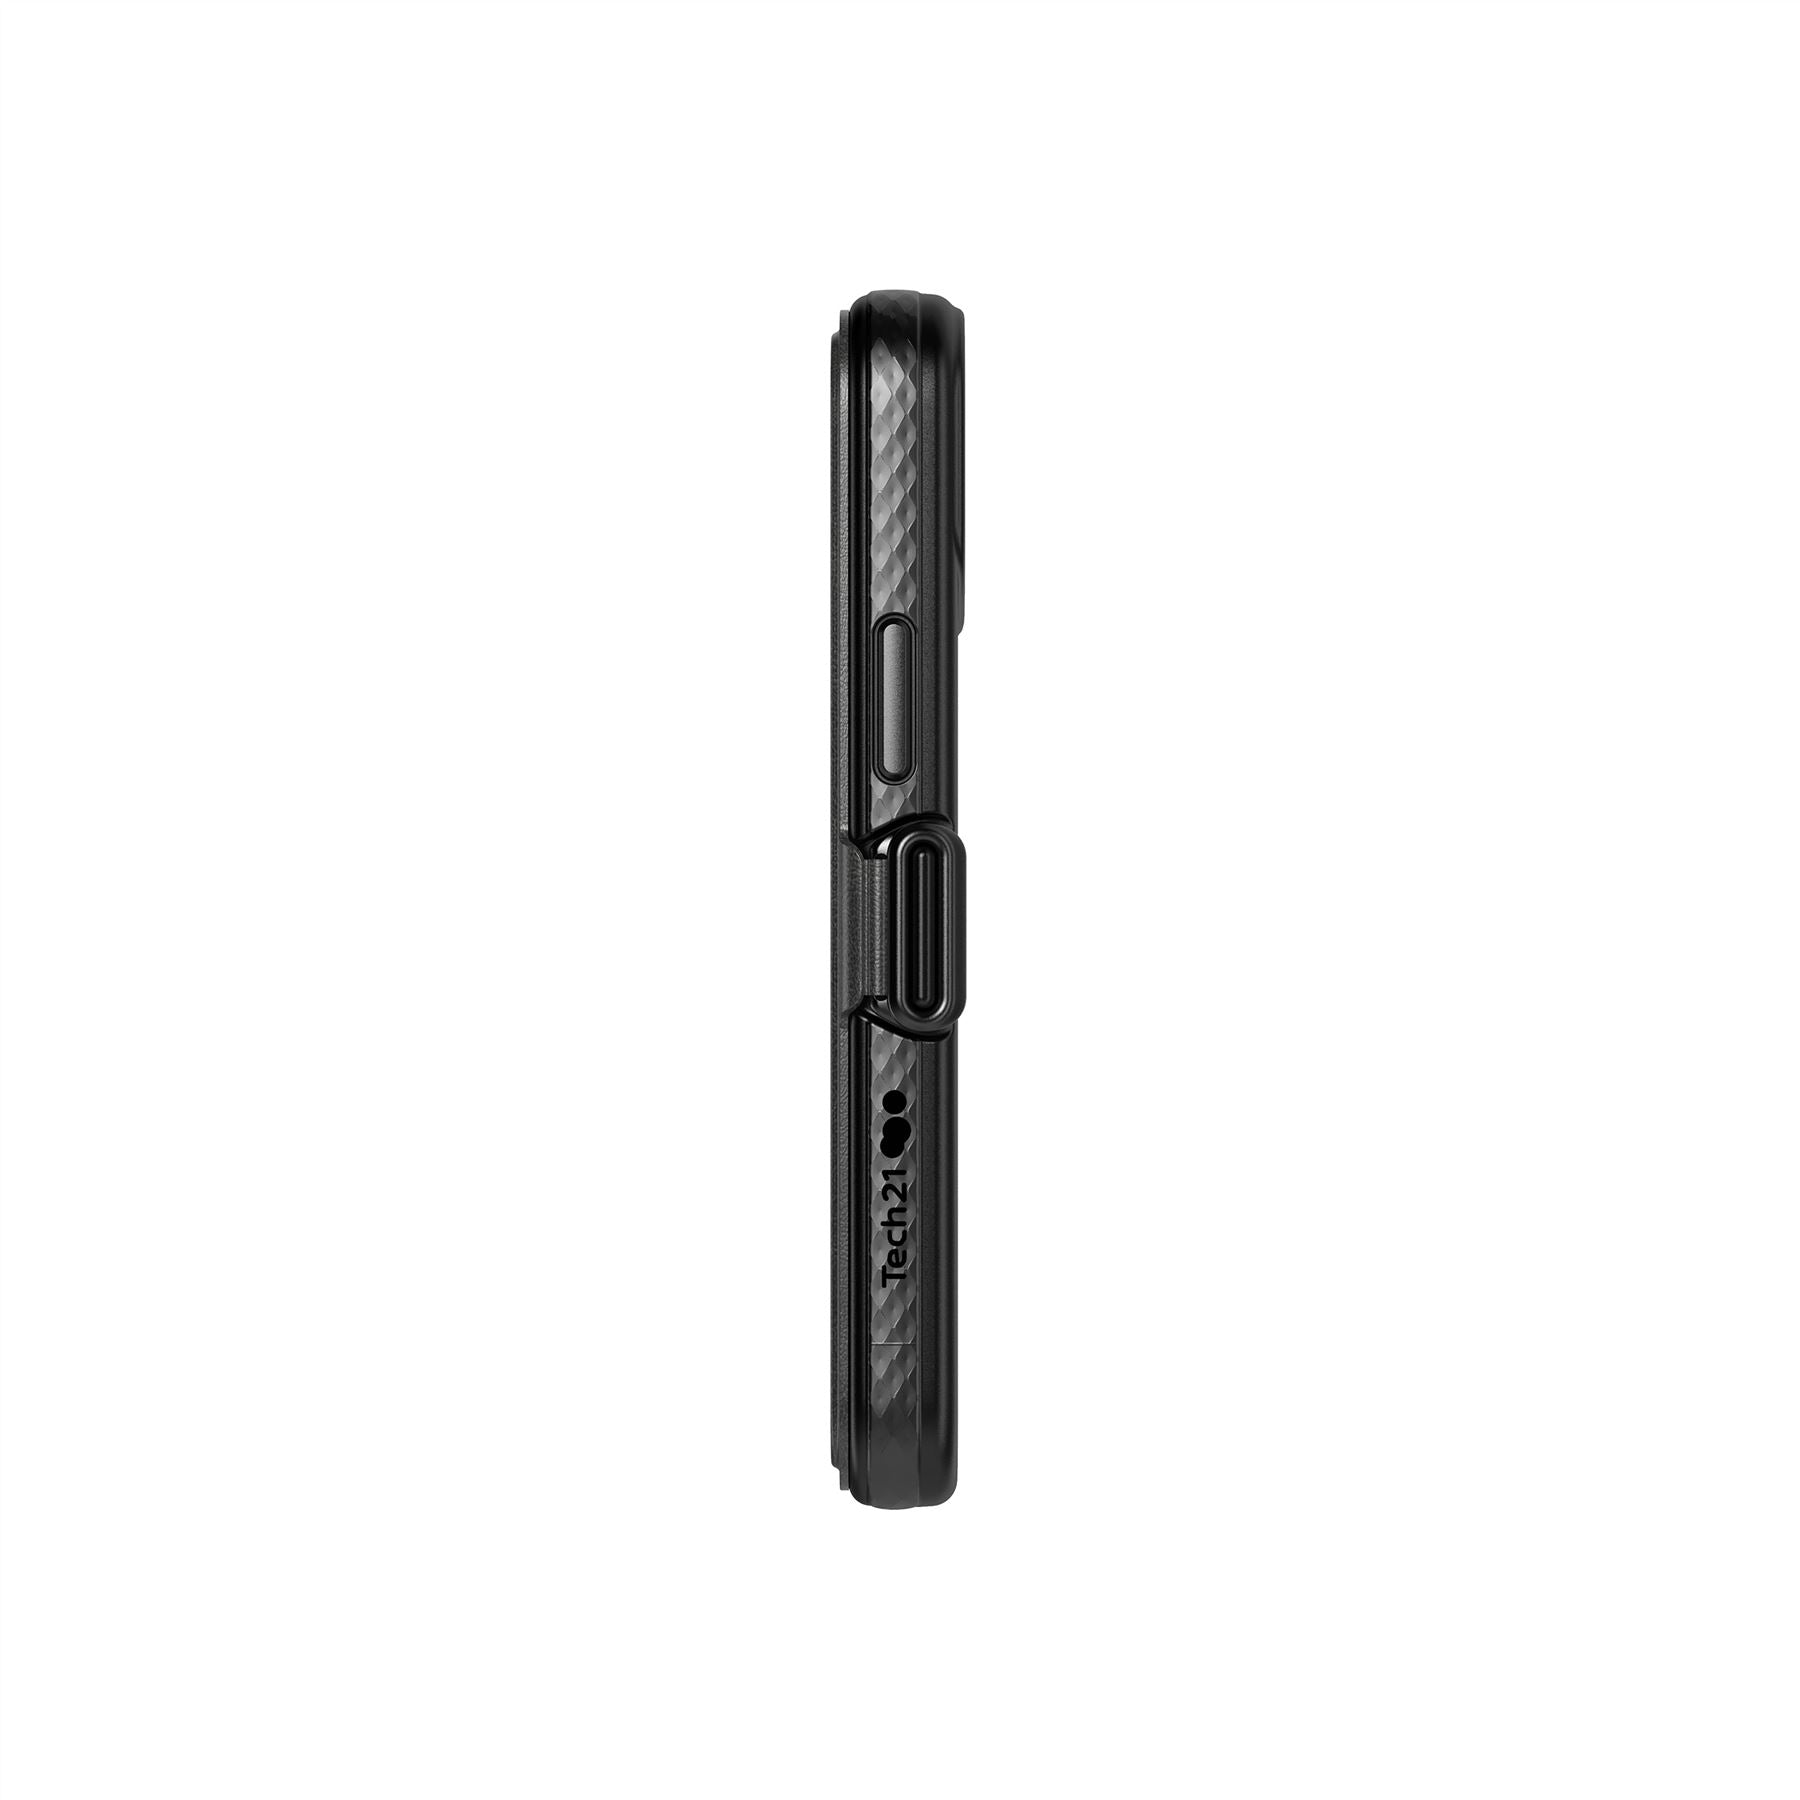 Evo Wallet - Apple iPhone 13 mini Case - Black